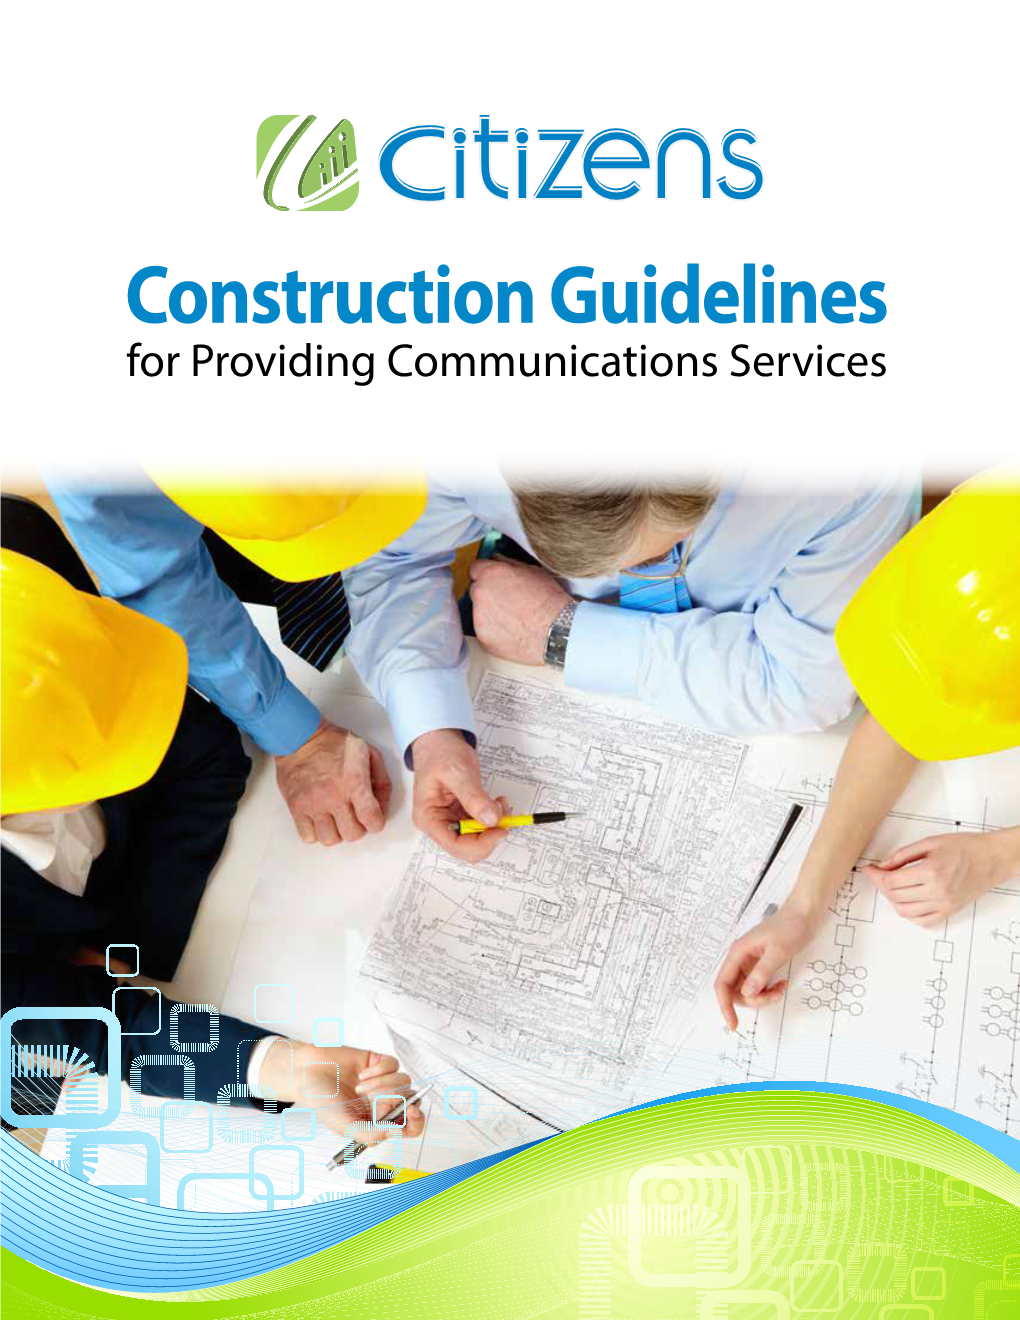 Citizens Construction Guidelines